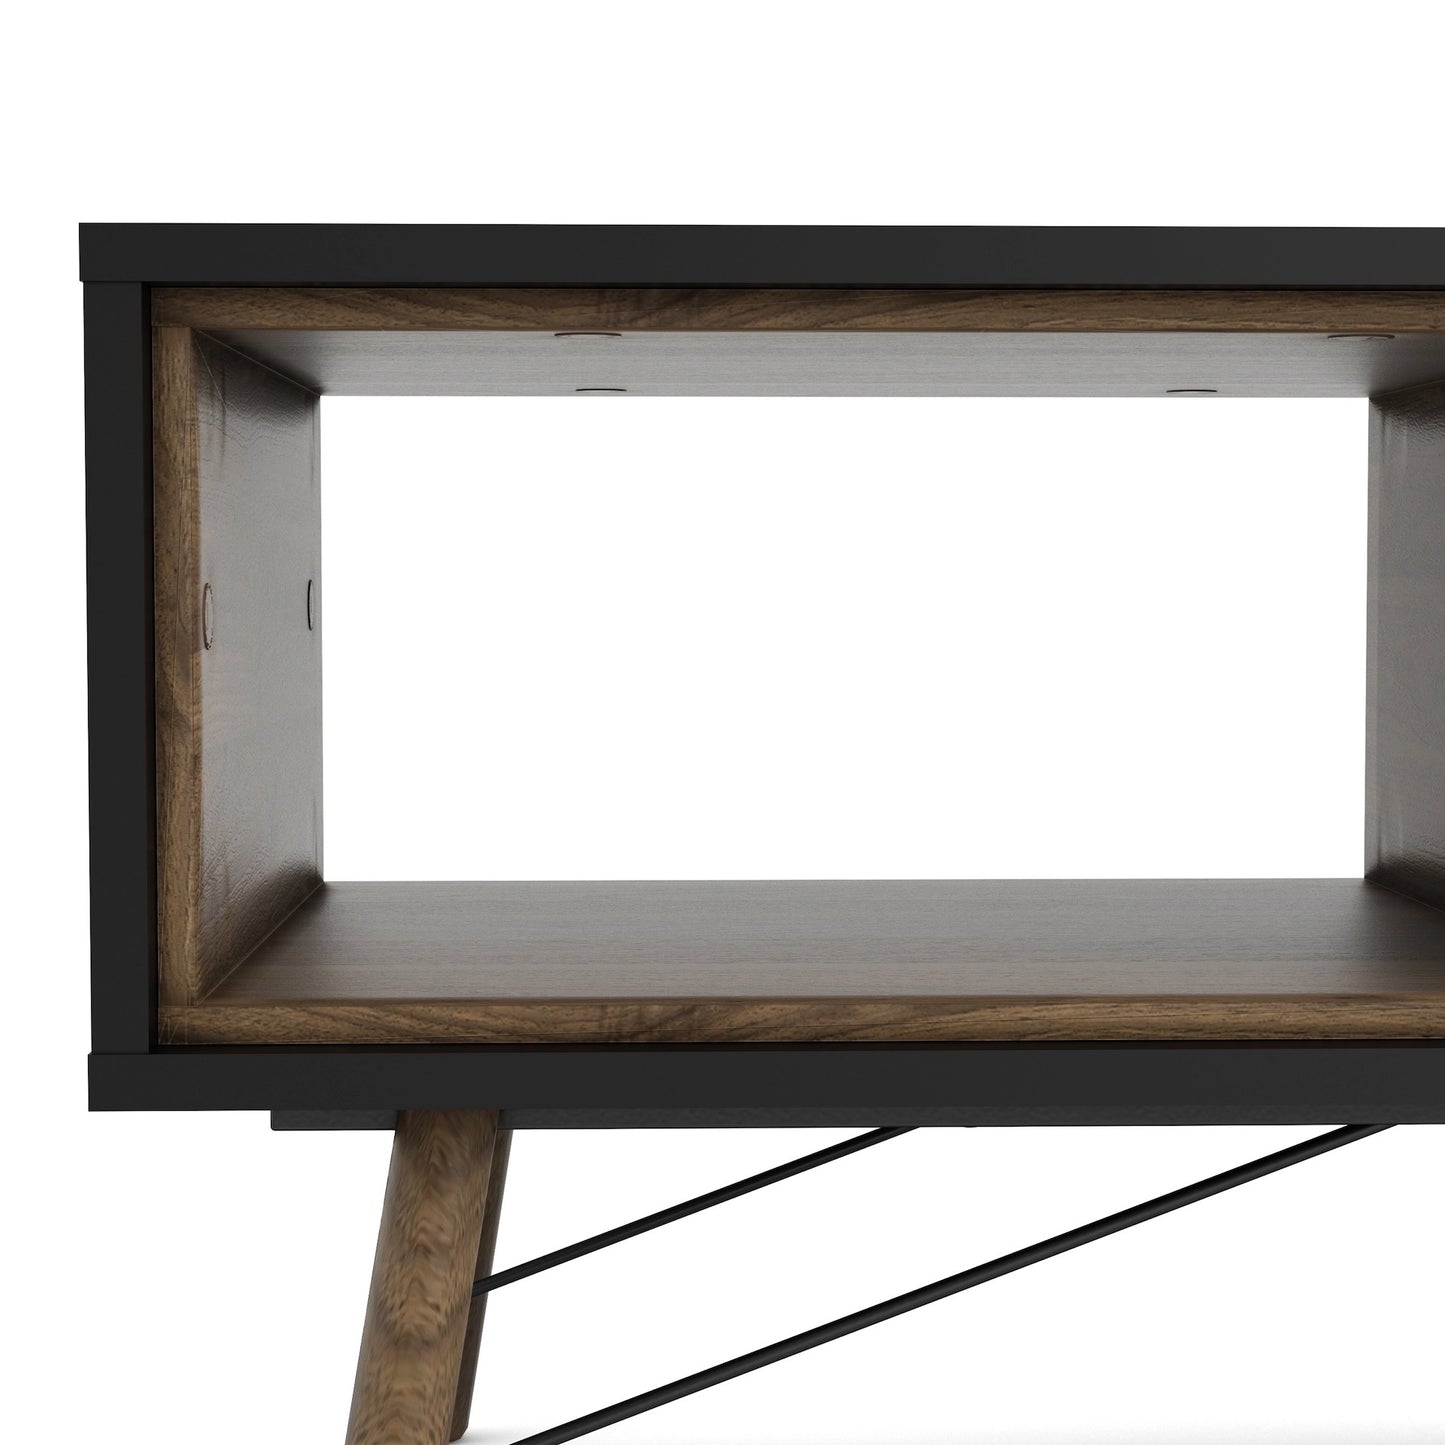 Furniture To Go Ry Coffee Table with 1 Drawer Matt Black Walnut